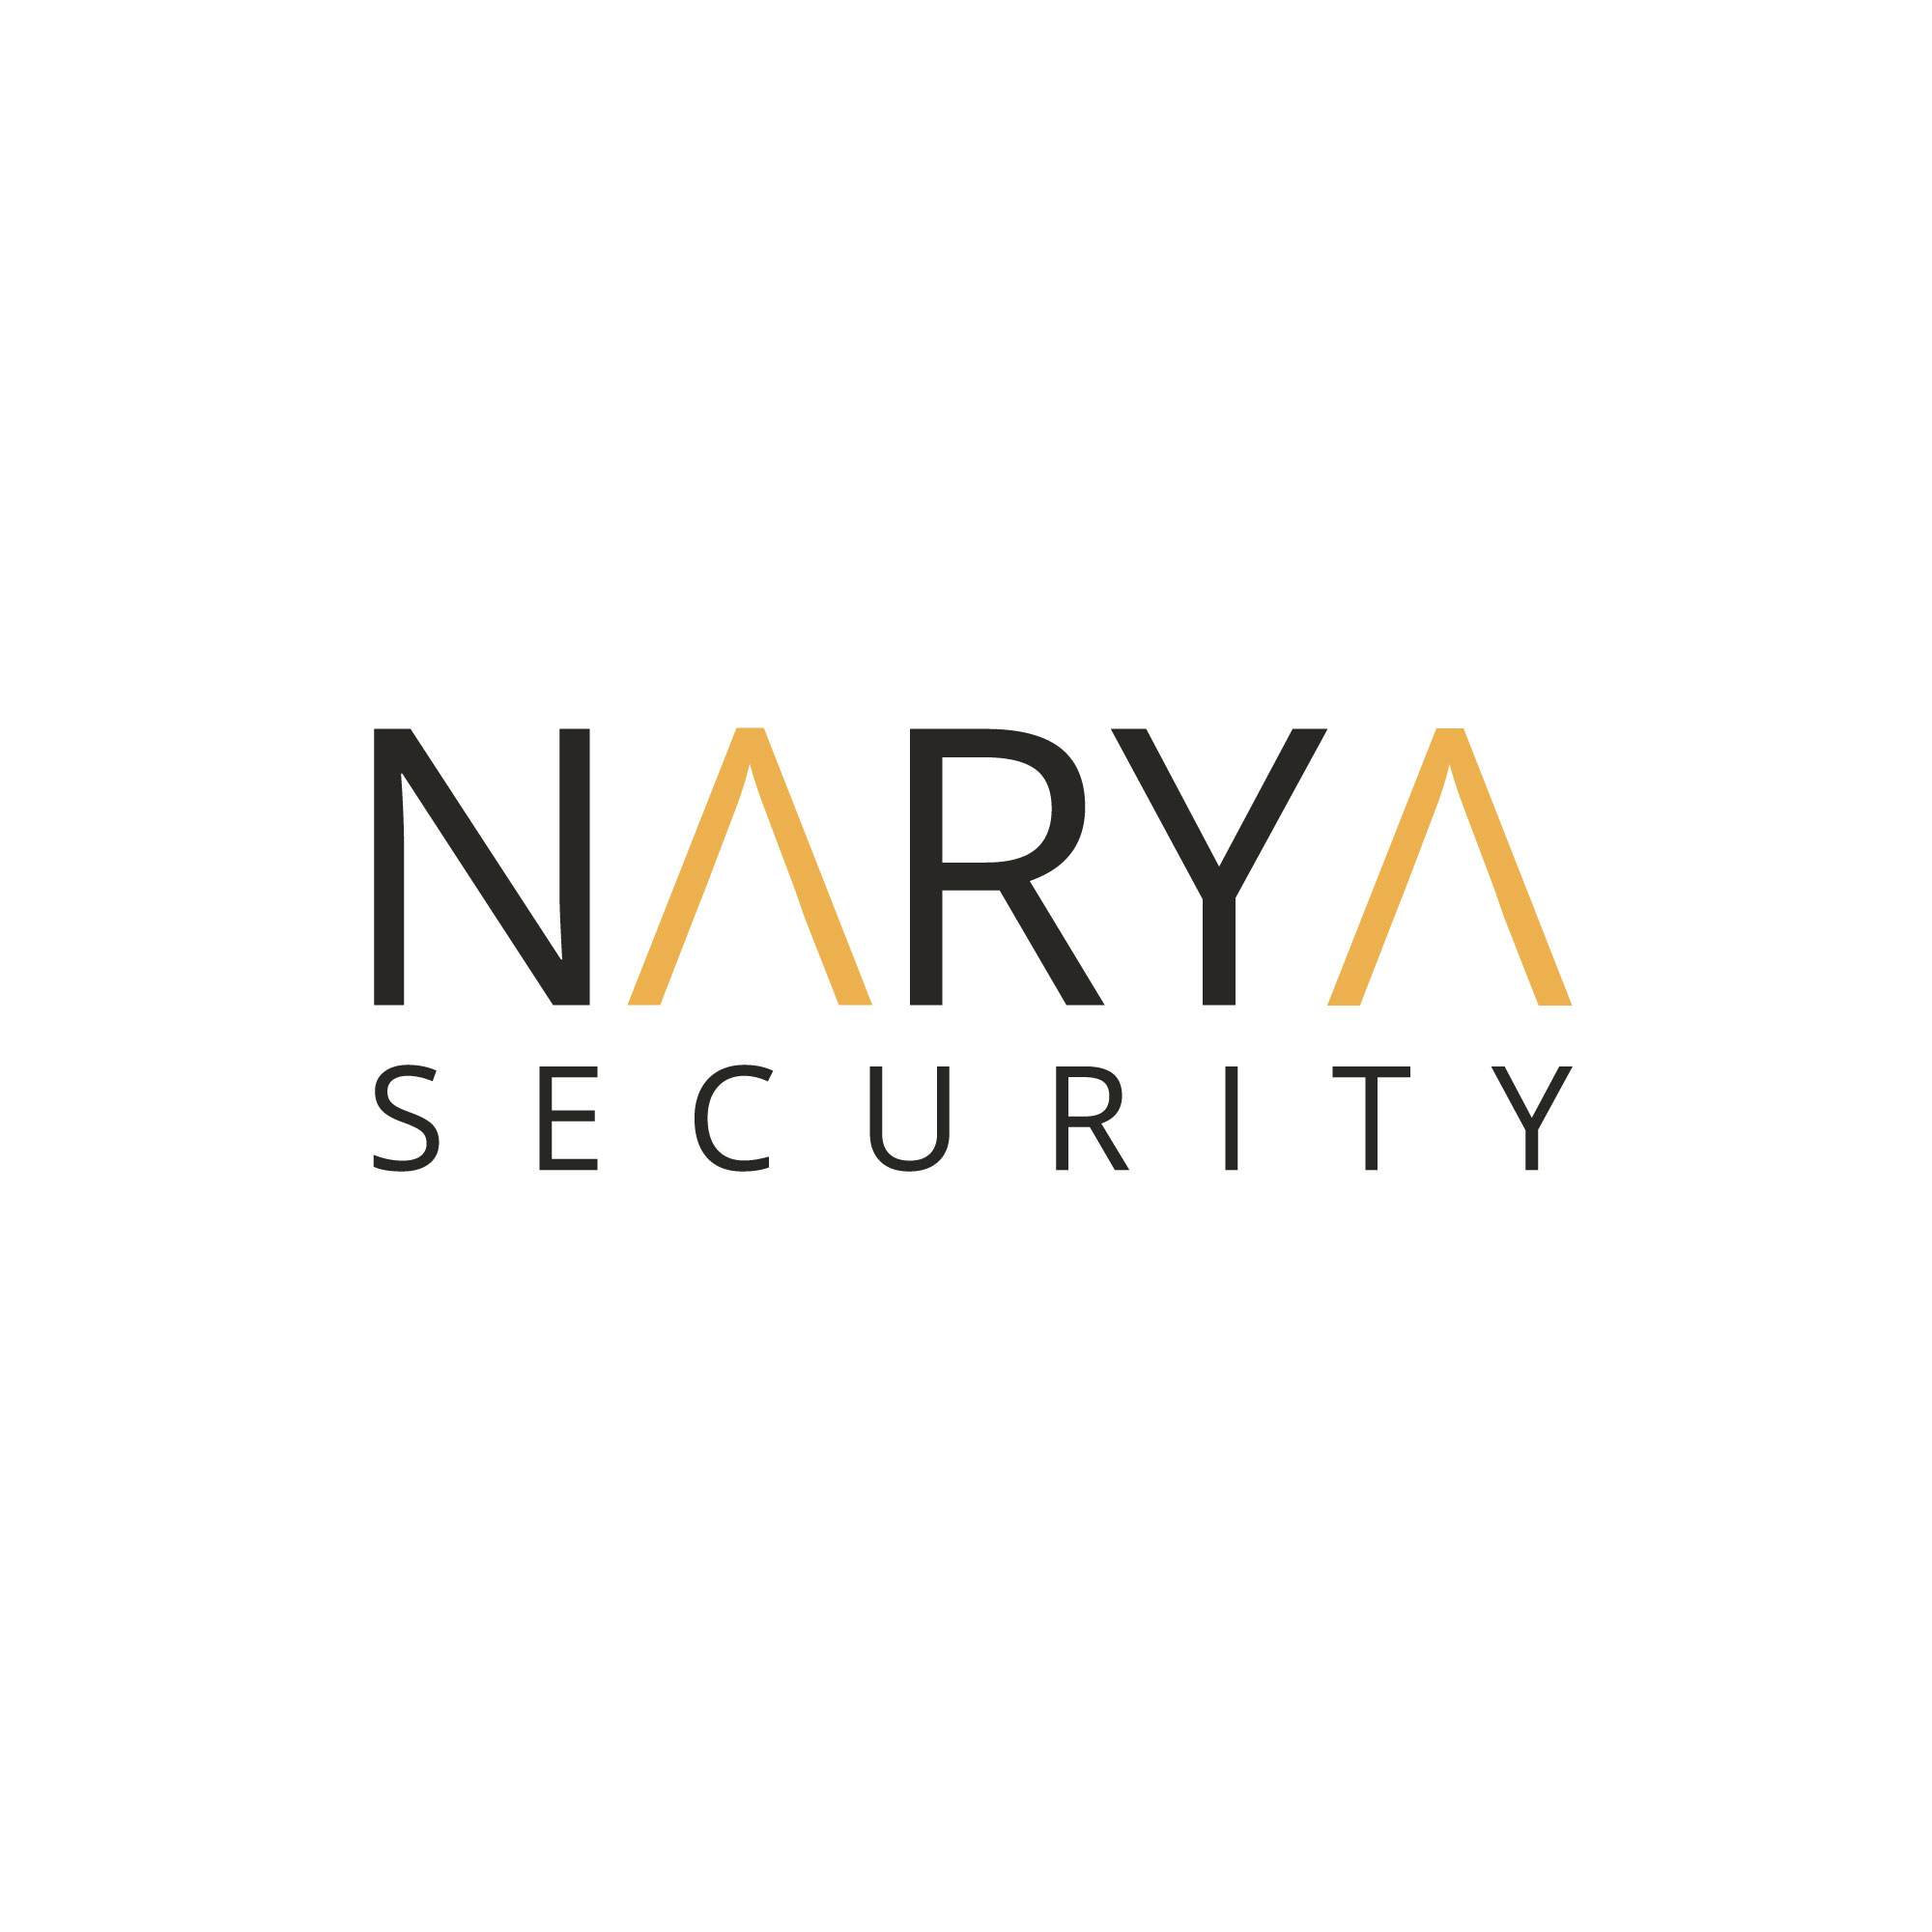 Narya Security logo